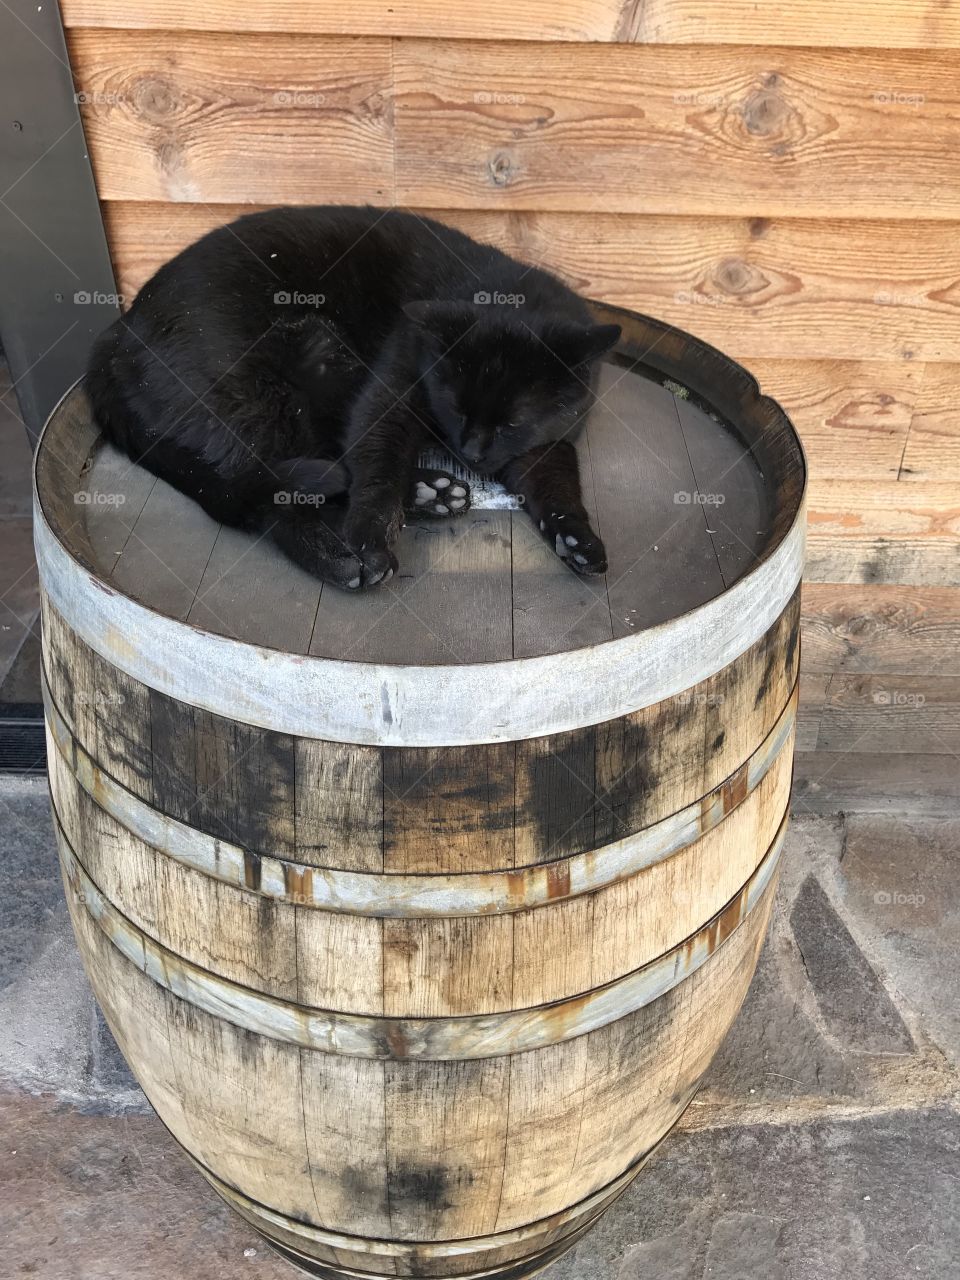 Sleeping black cat on wooden barrel 